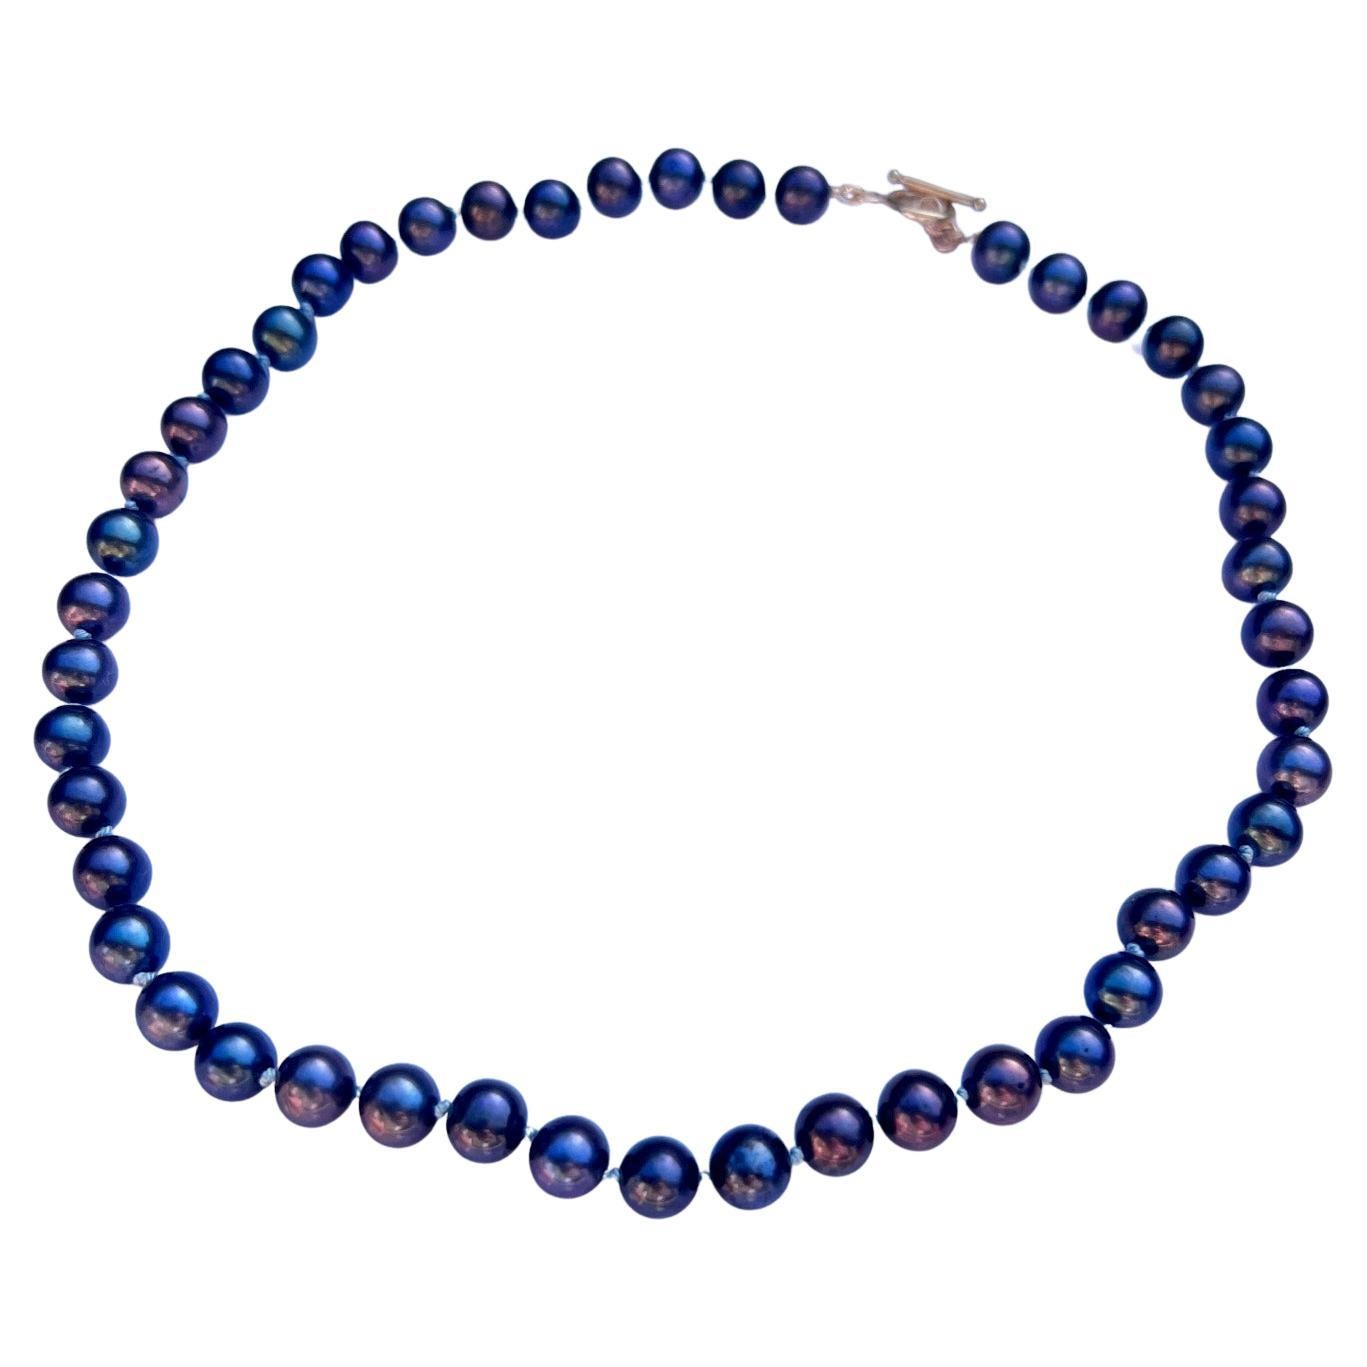 Black Pearl Necklace Choker Light Blue Silk Thread J Dauphin 16